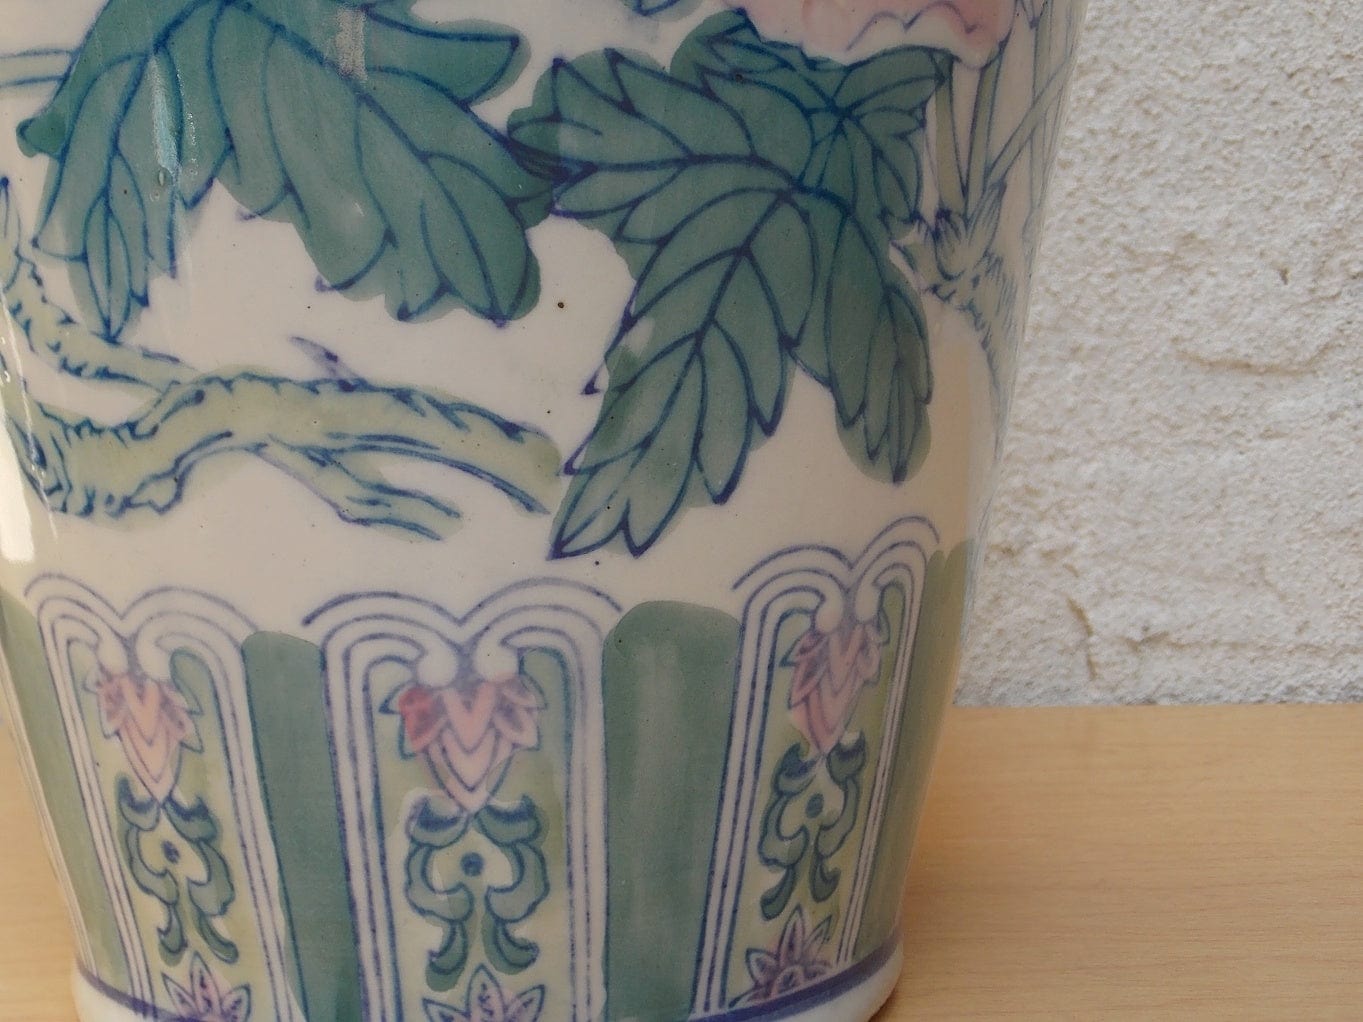 I Like Mike's Mid Century Modern Wall Decor & Art Large Ceramic White Blue Pink Italian Vase, 1980s Chic, Handpainted